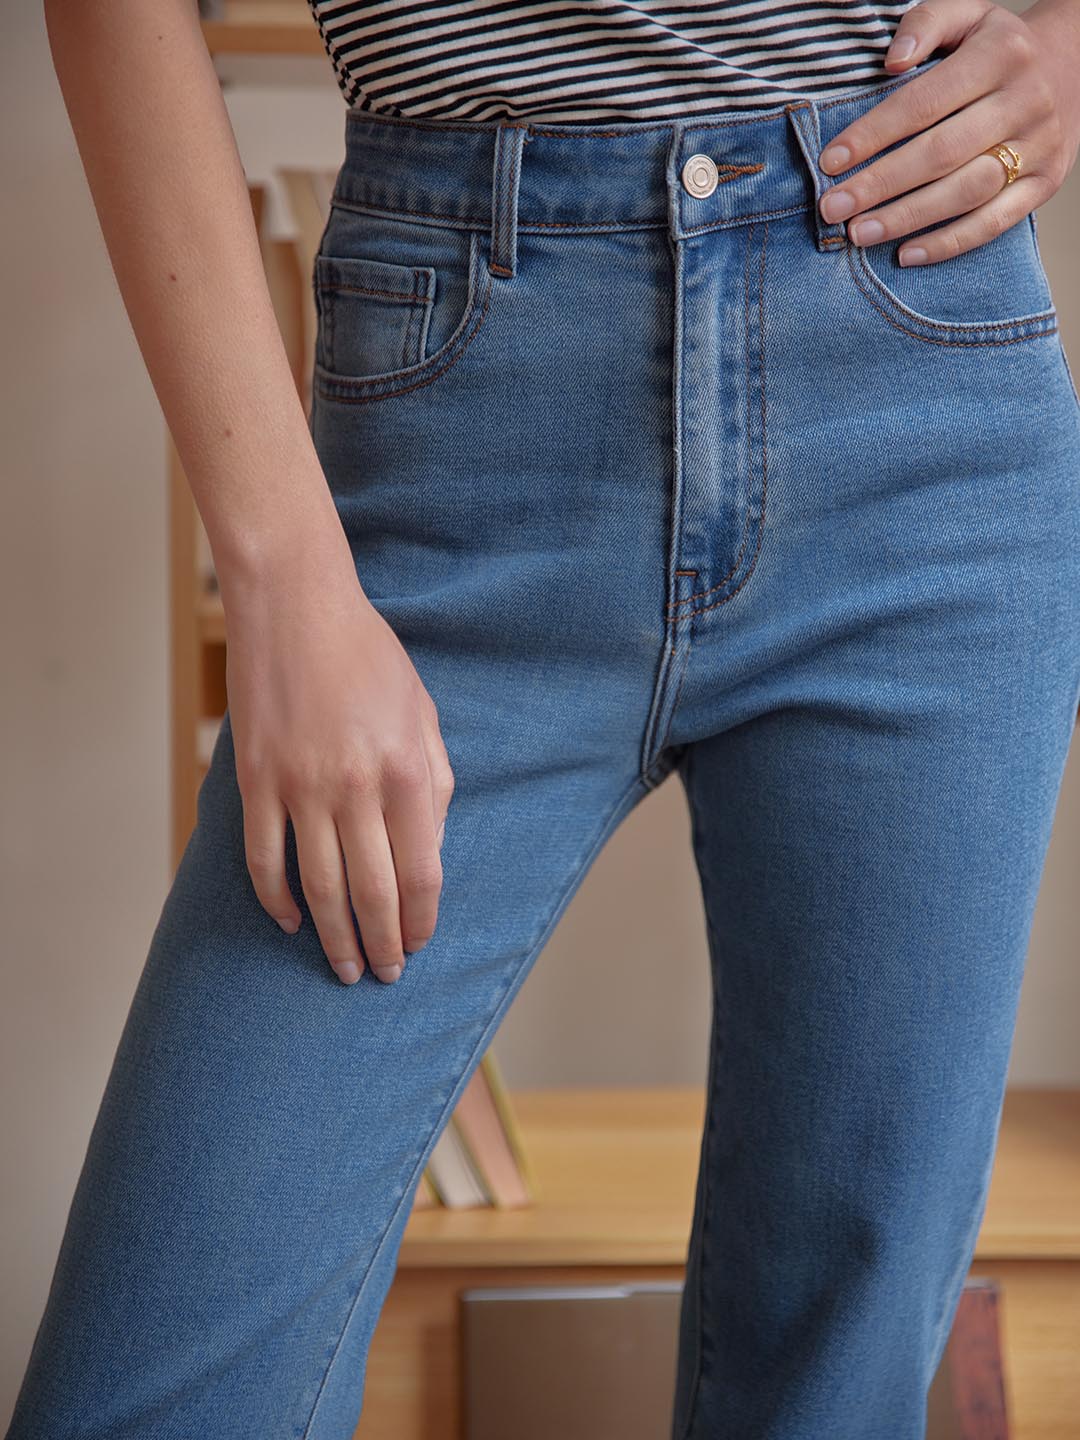 Simple Retro-Kira 藍色高腰直筒顯瘦牛仔褲